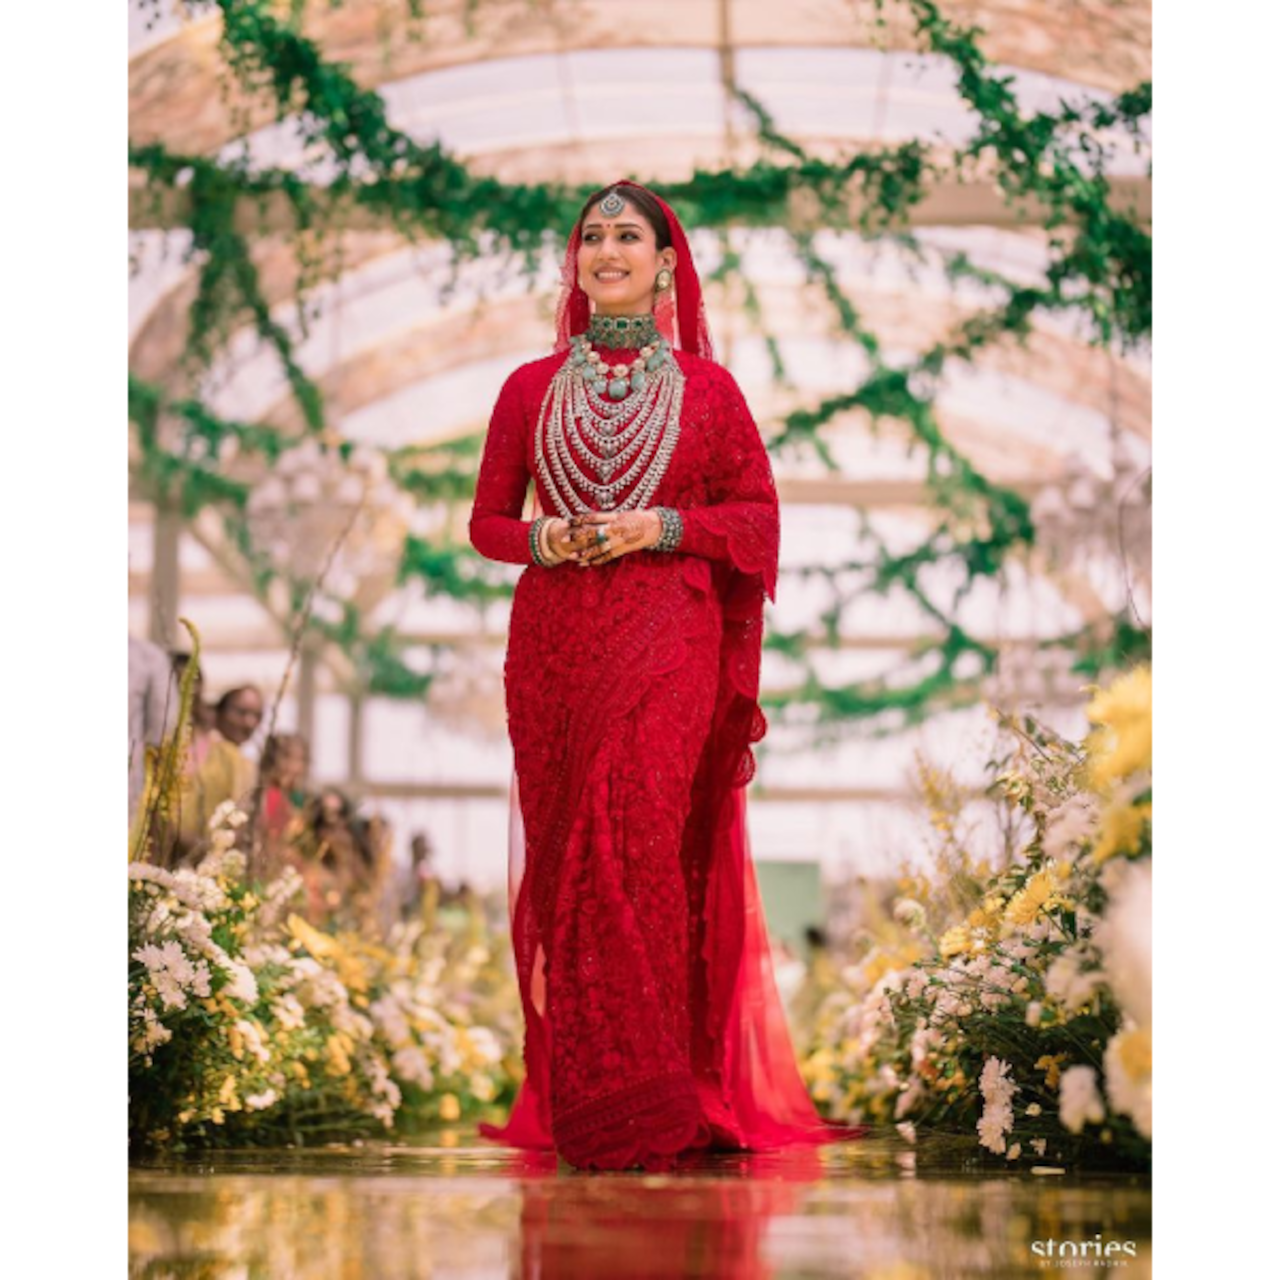 The gorgeous bride Nayanthara